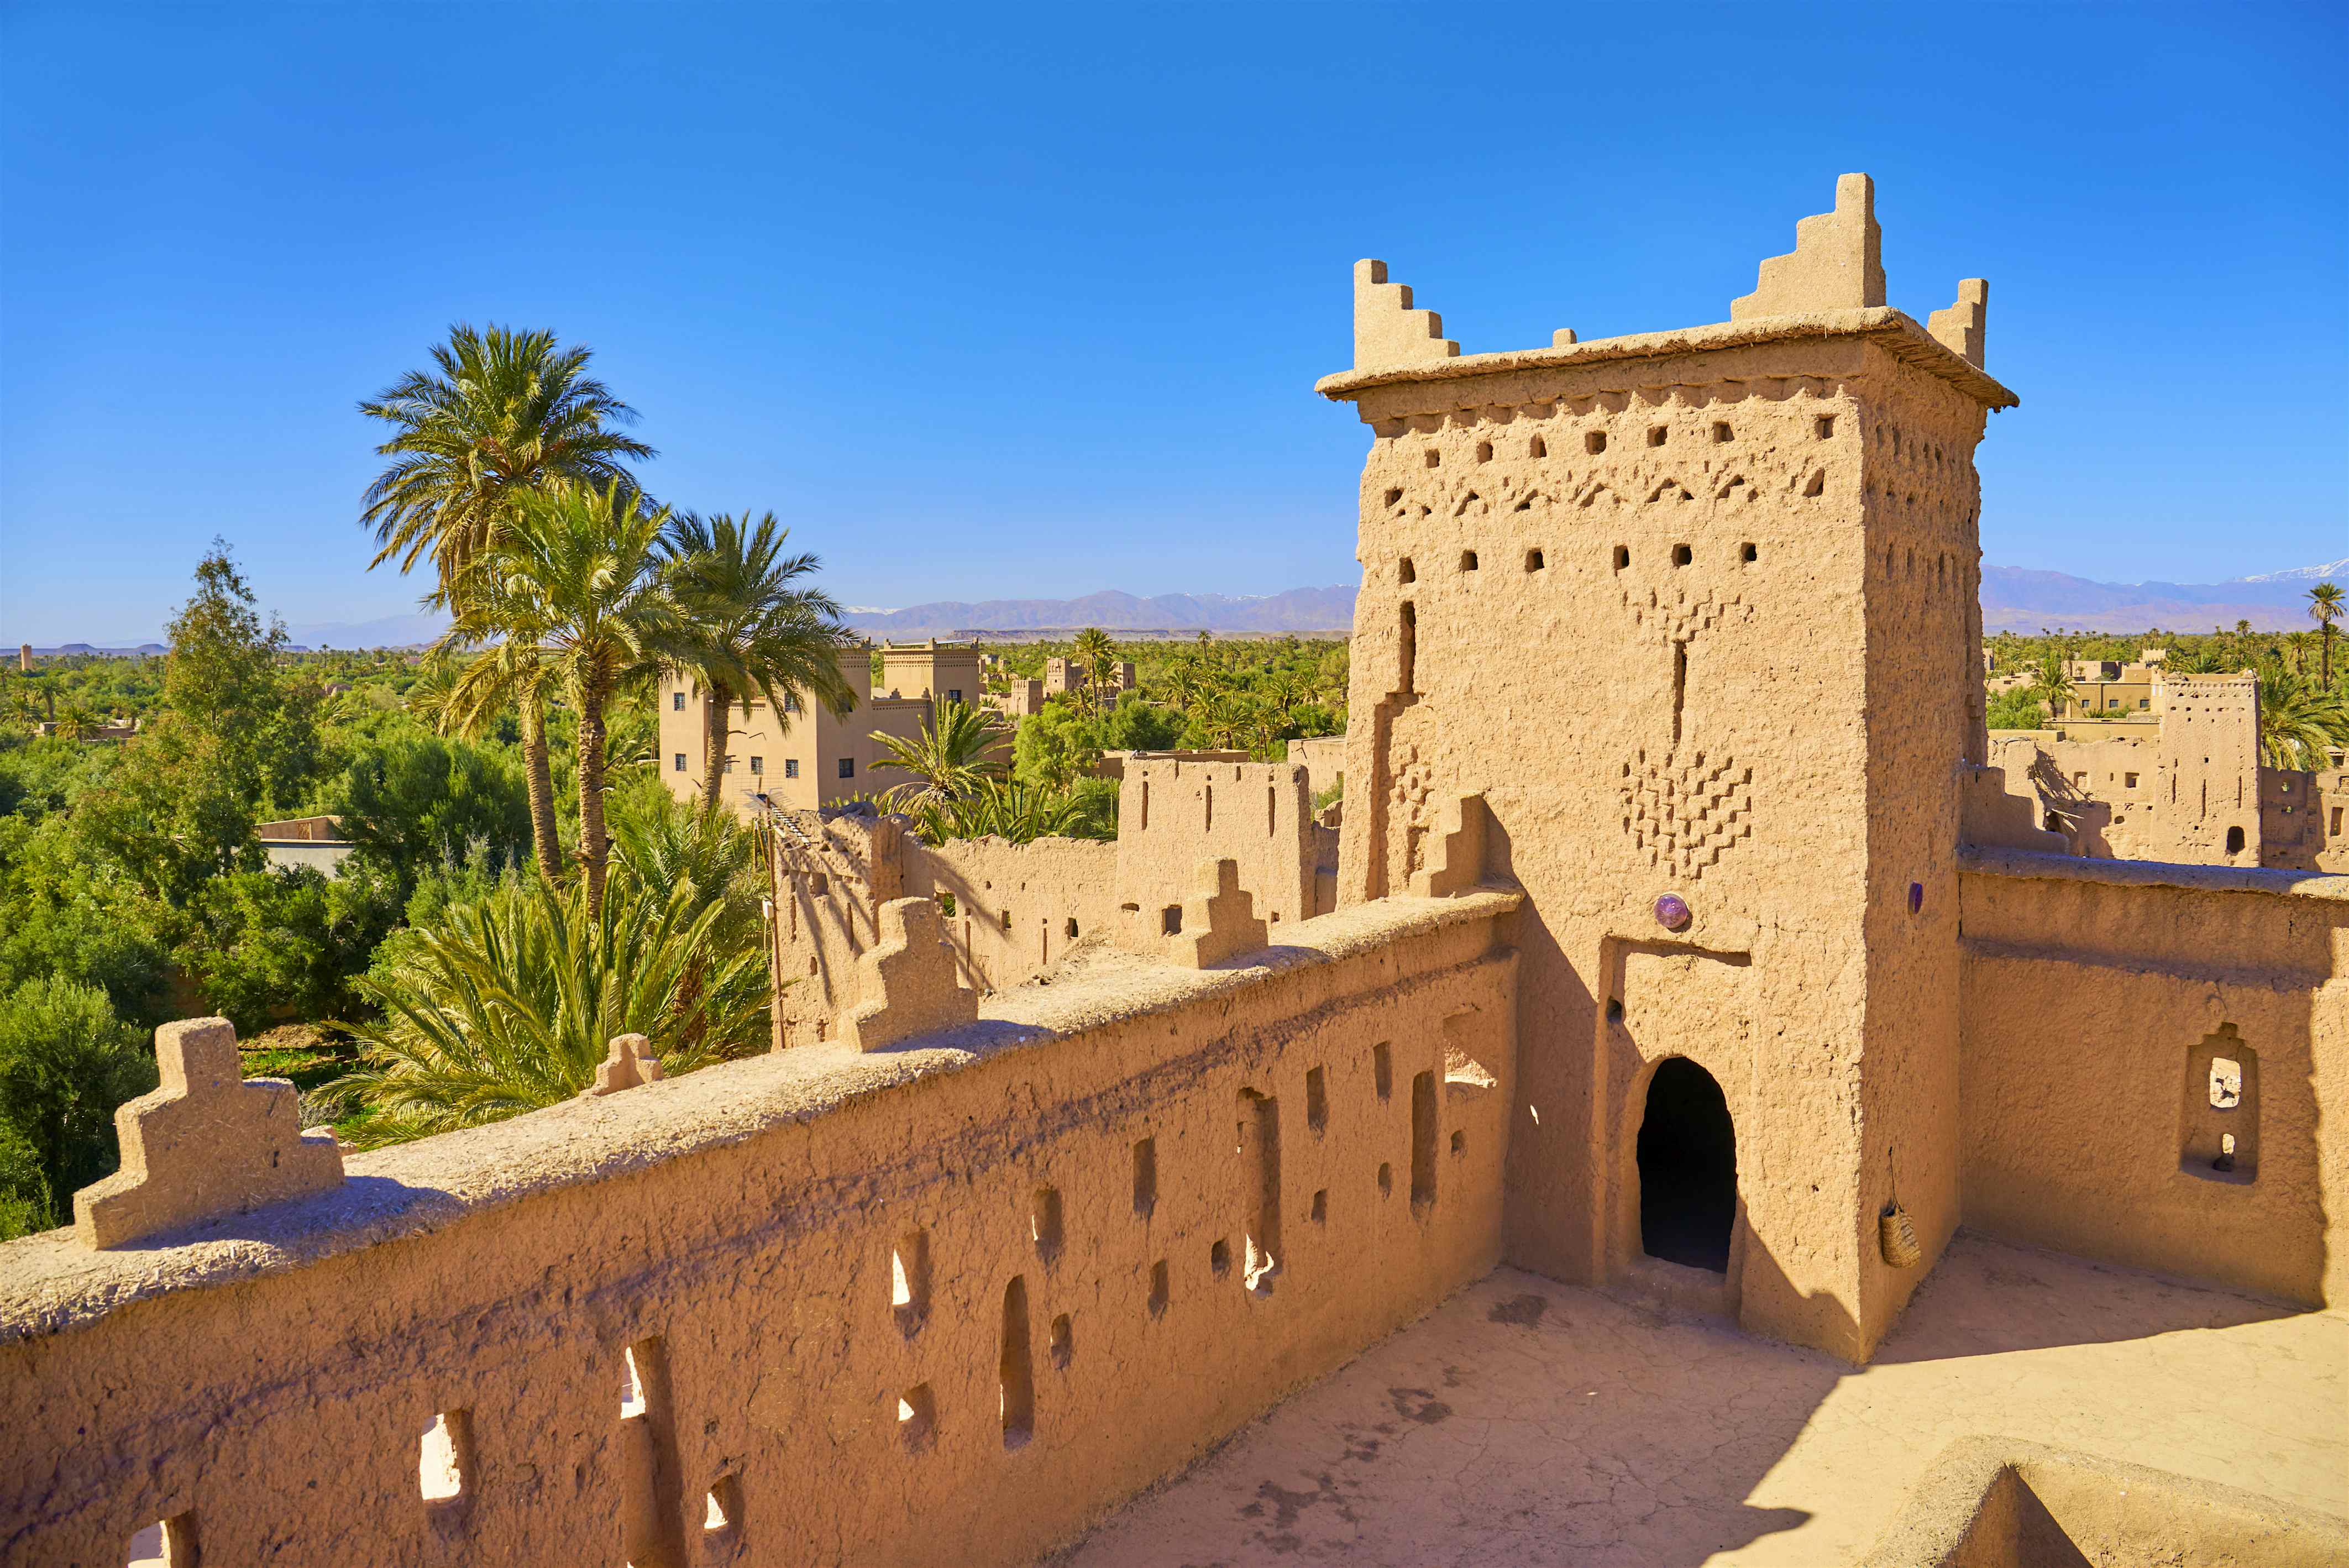 travel to morocco in september